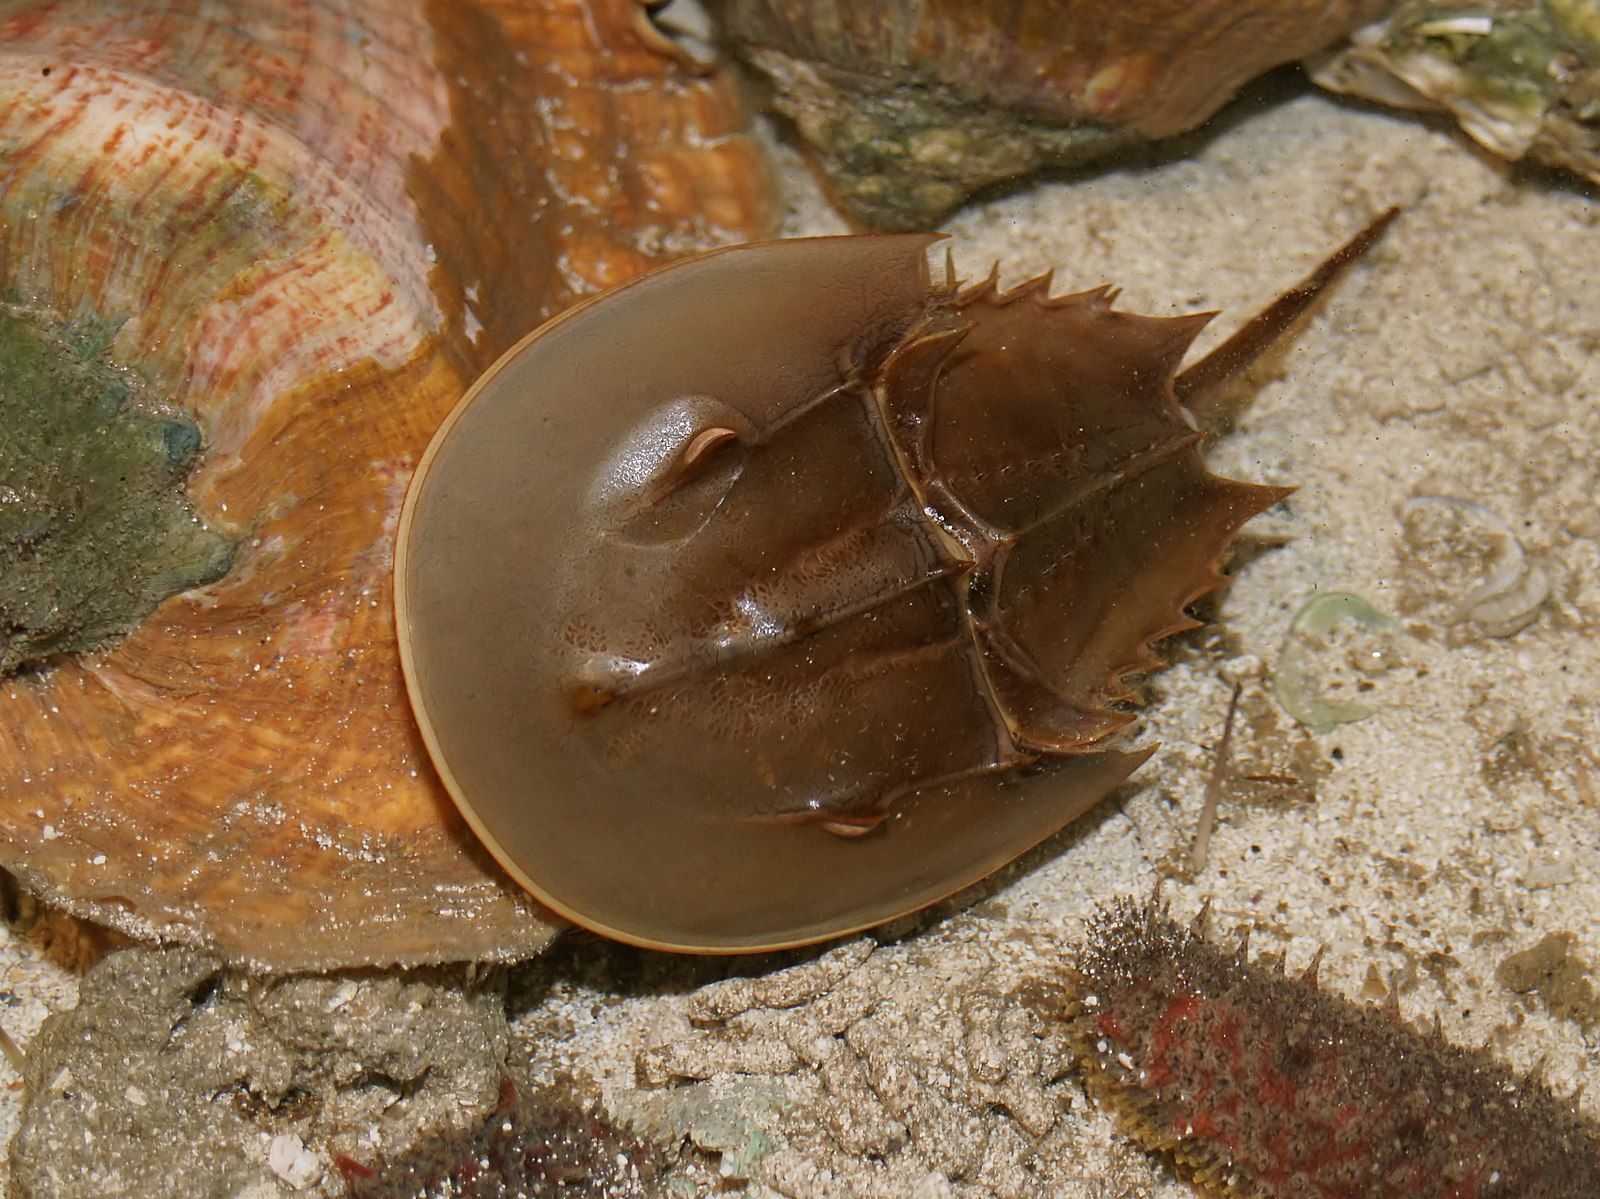 Horseshoe crab by Hans Hillewaert, Wikimedia Commons